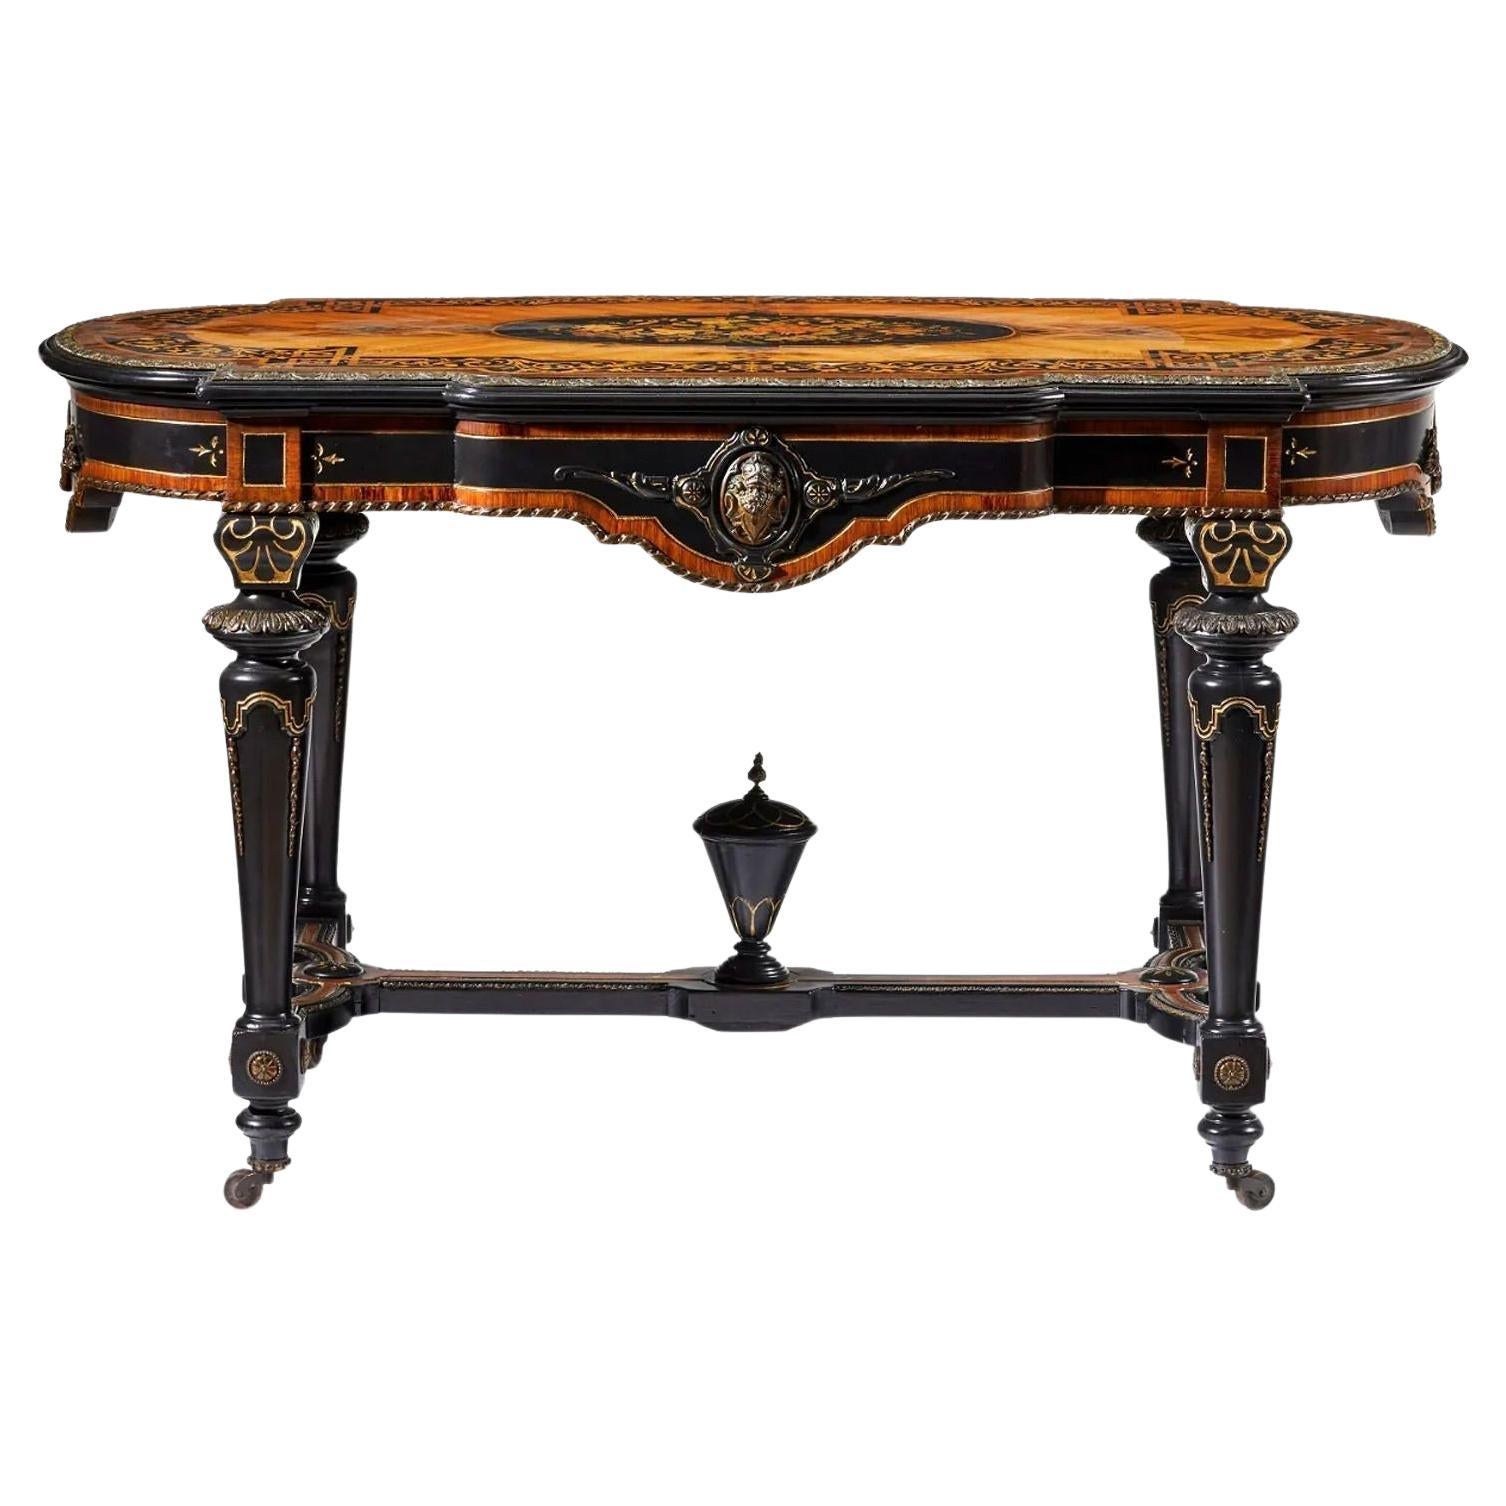 Italian Renaissance Revival Library Table For Sale